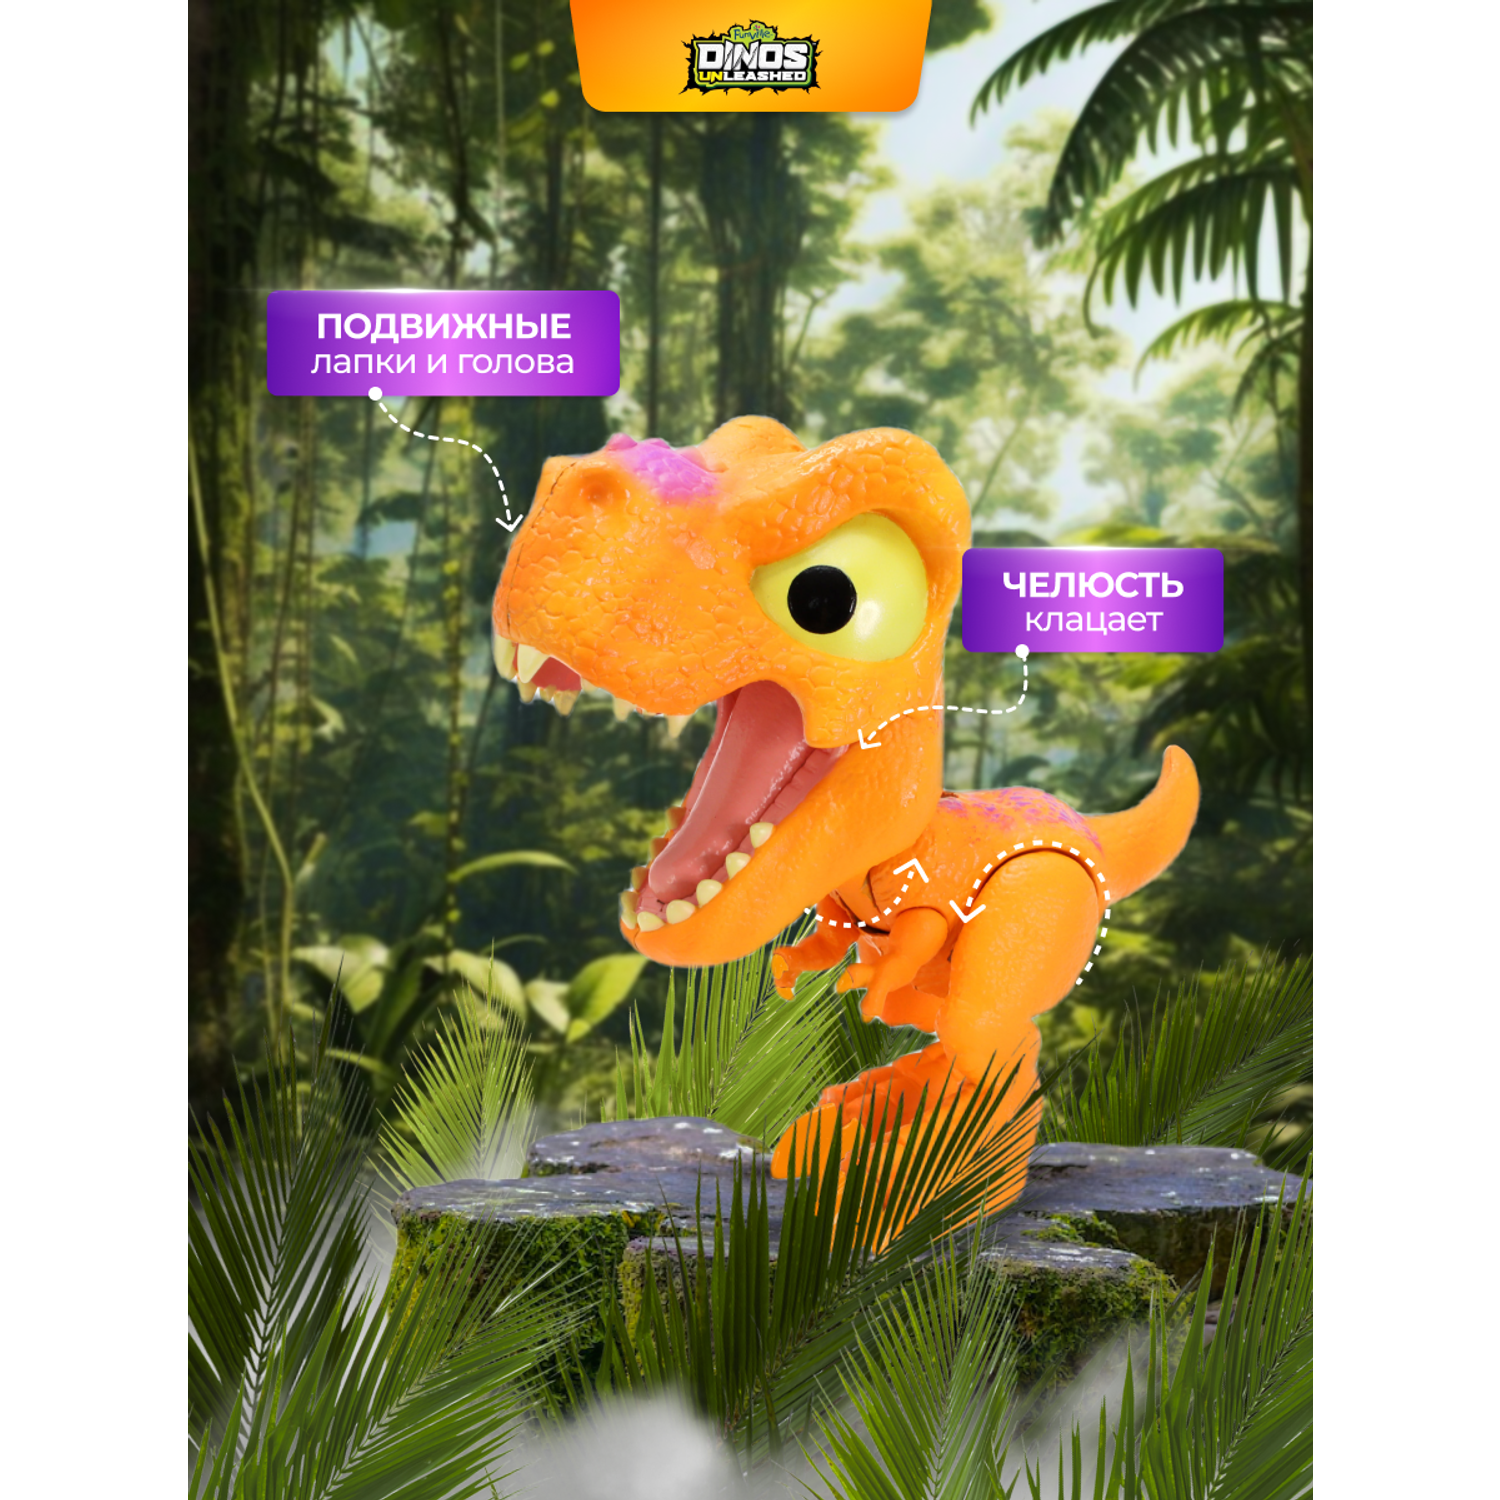 Фигурка динозавра Dinos Unleashed клацающий тираннозавр мини - фото 12